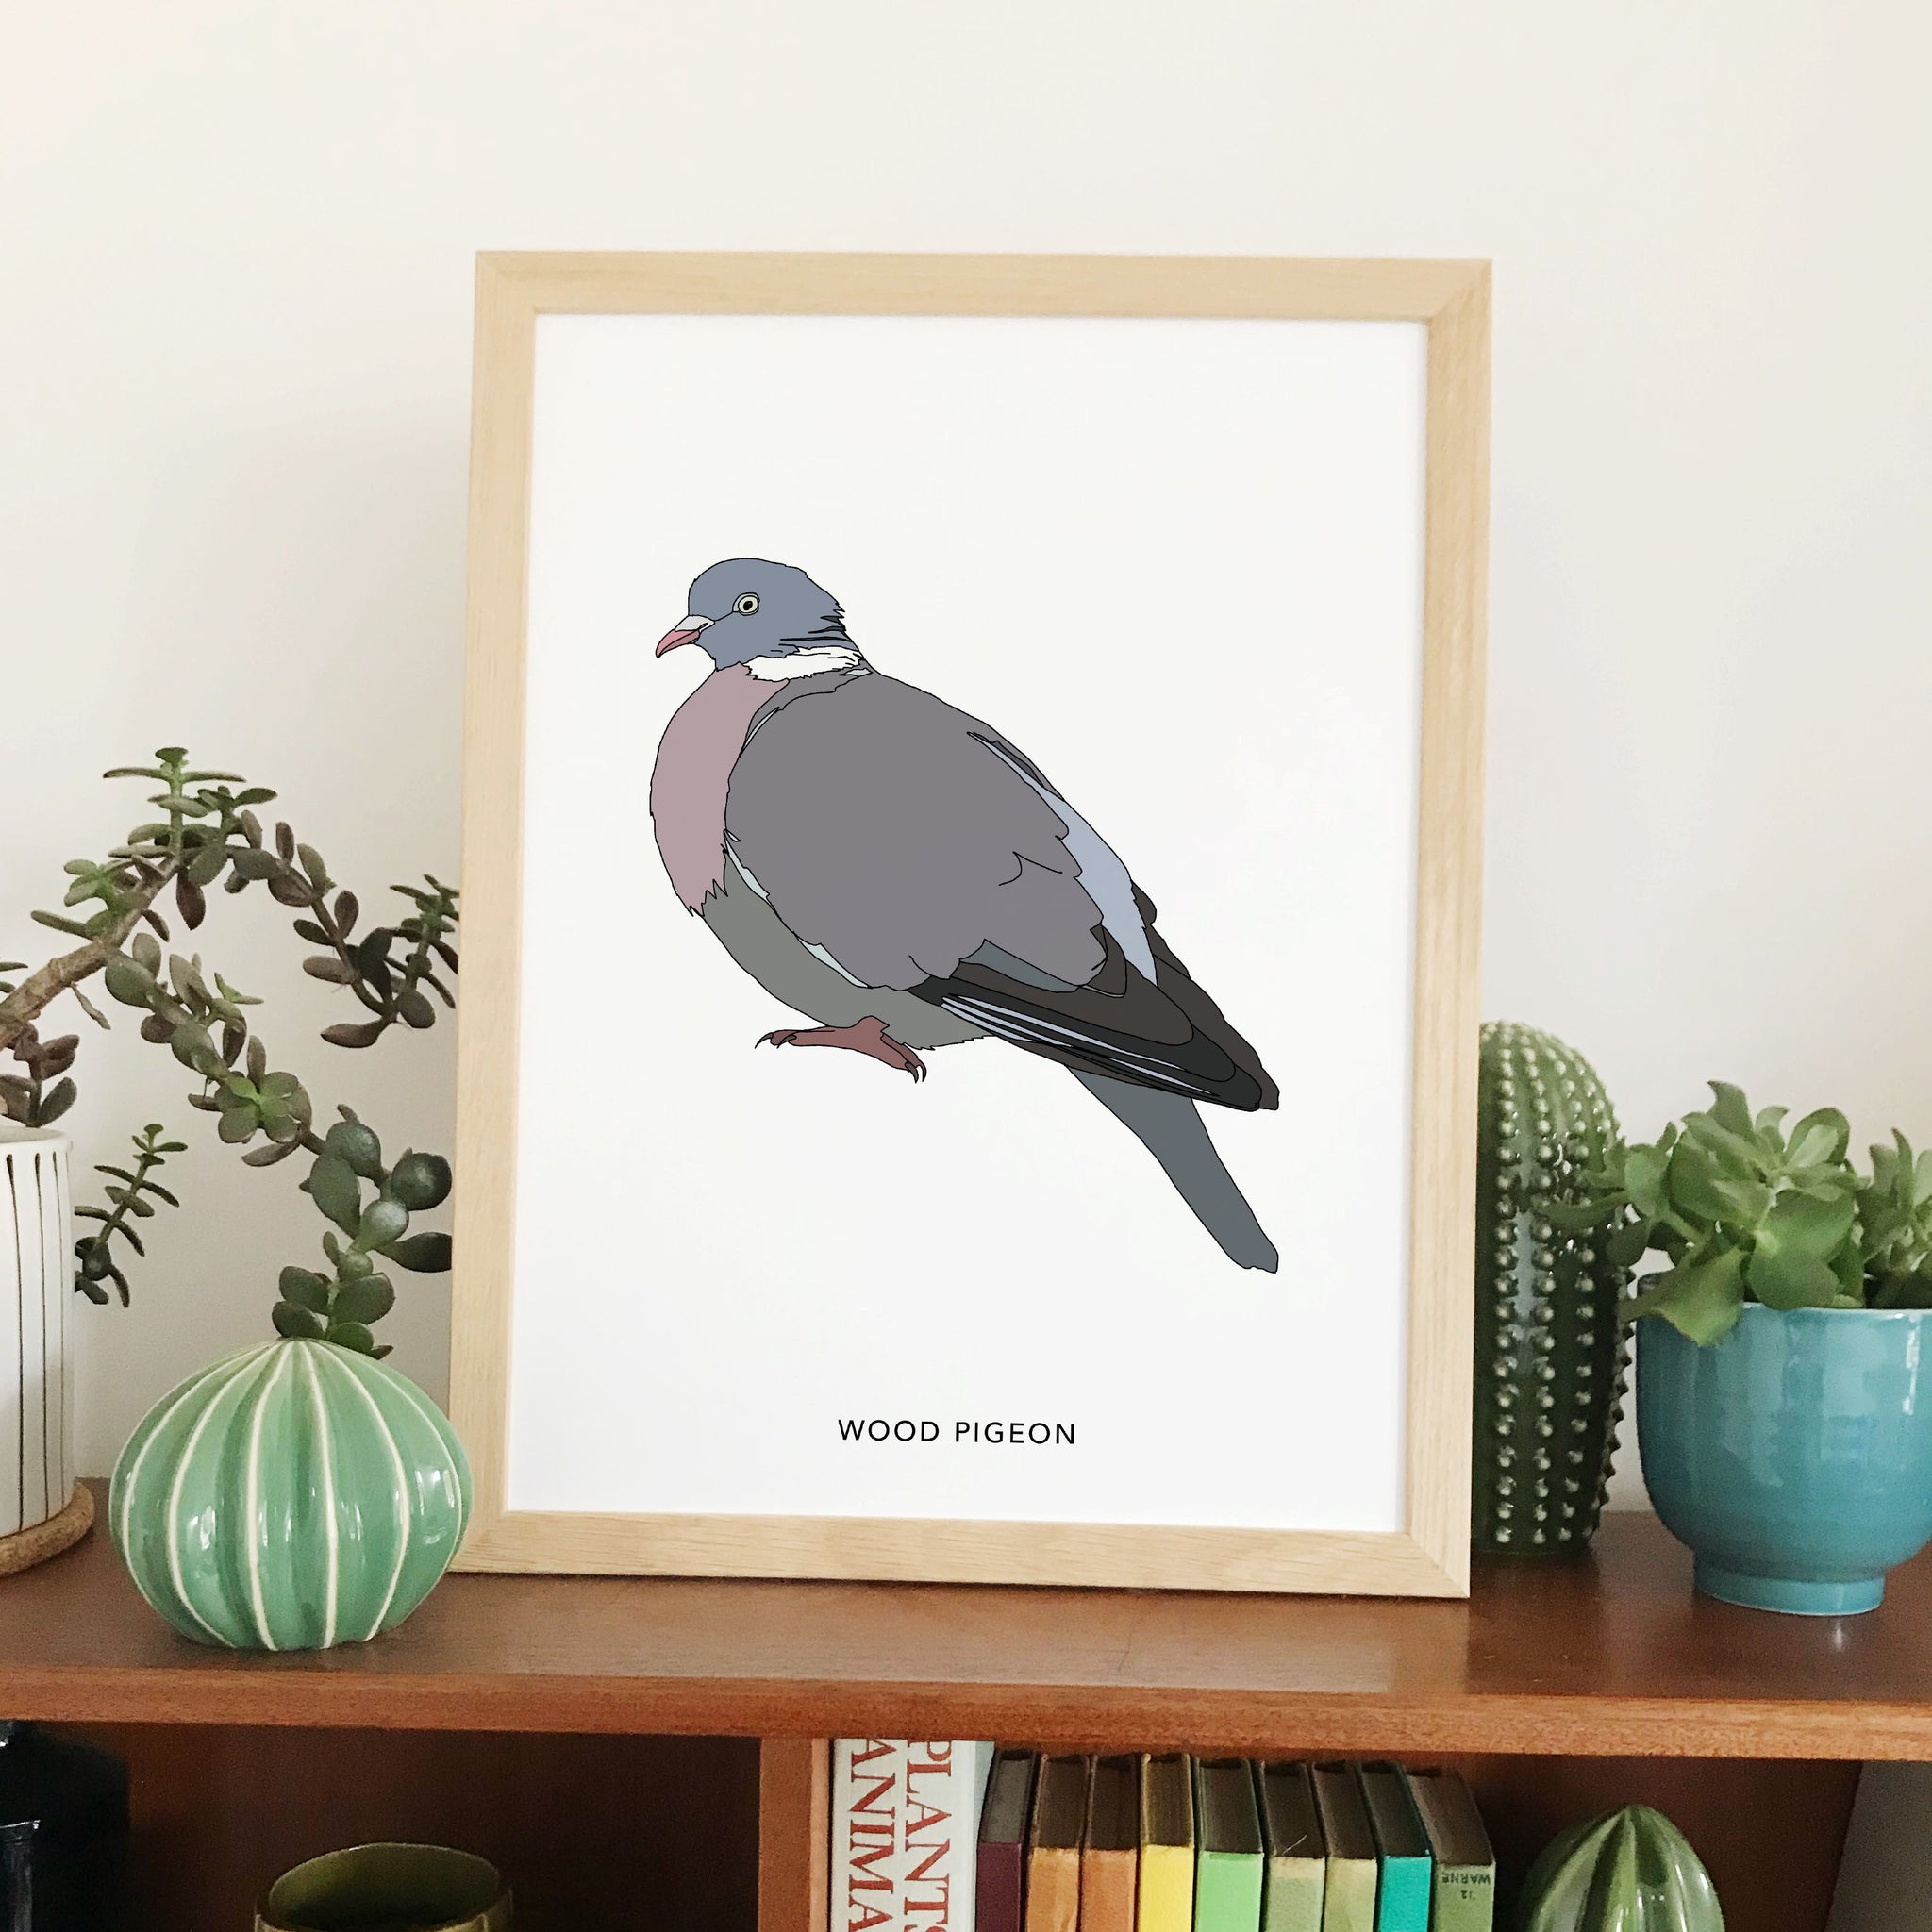 Wood Pigeon bird print